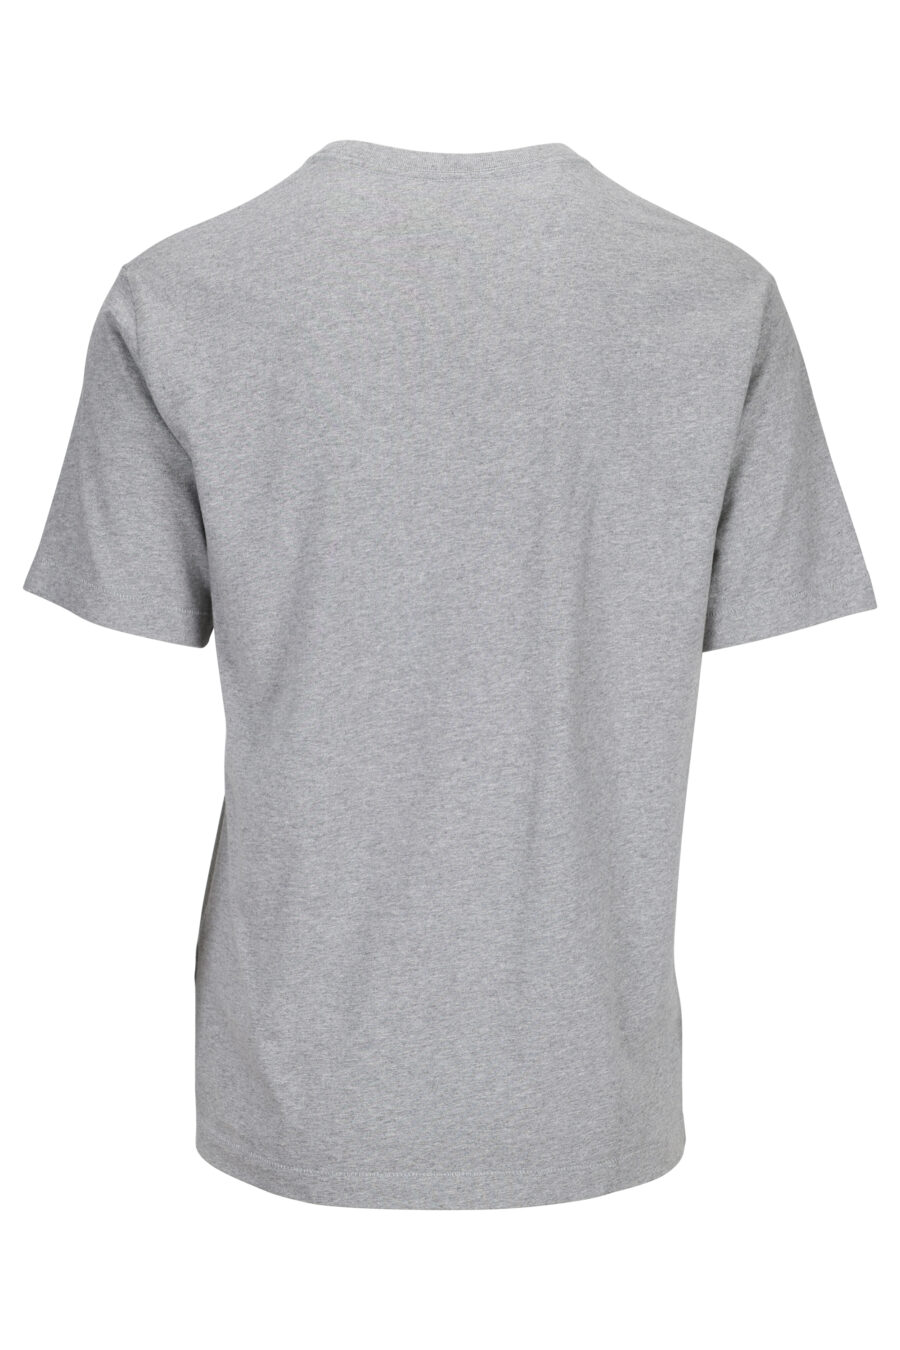 Camiseta gris con logo "kenzo academy" - 3612230545502 1